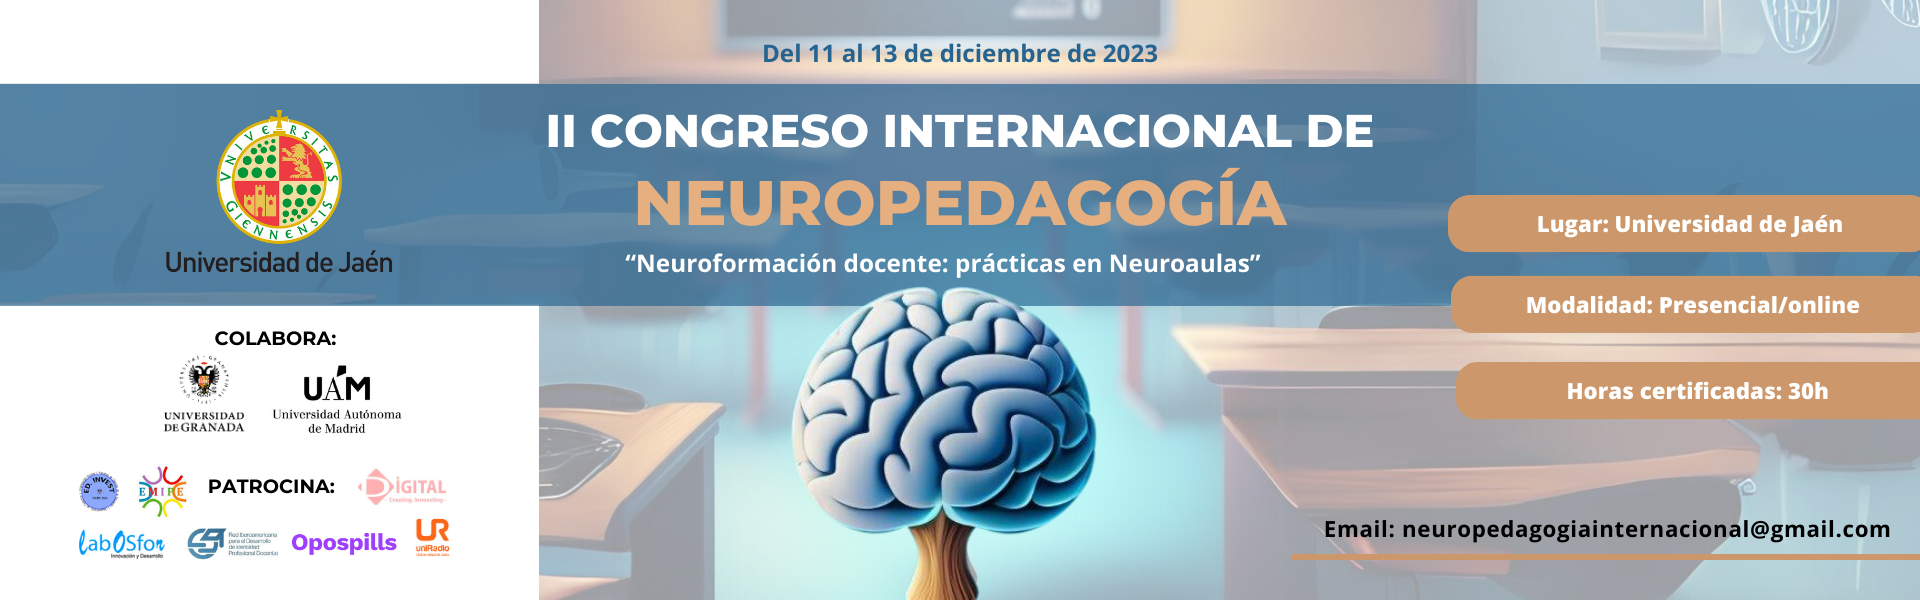 II Congreso Internacional de Neuropedagogía